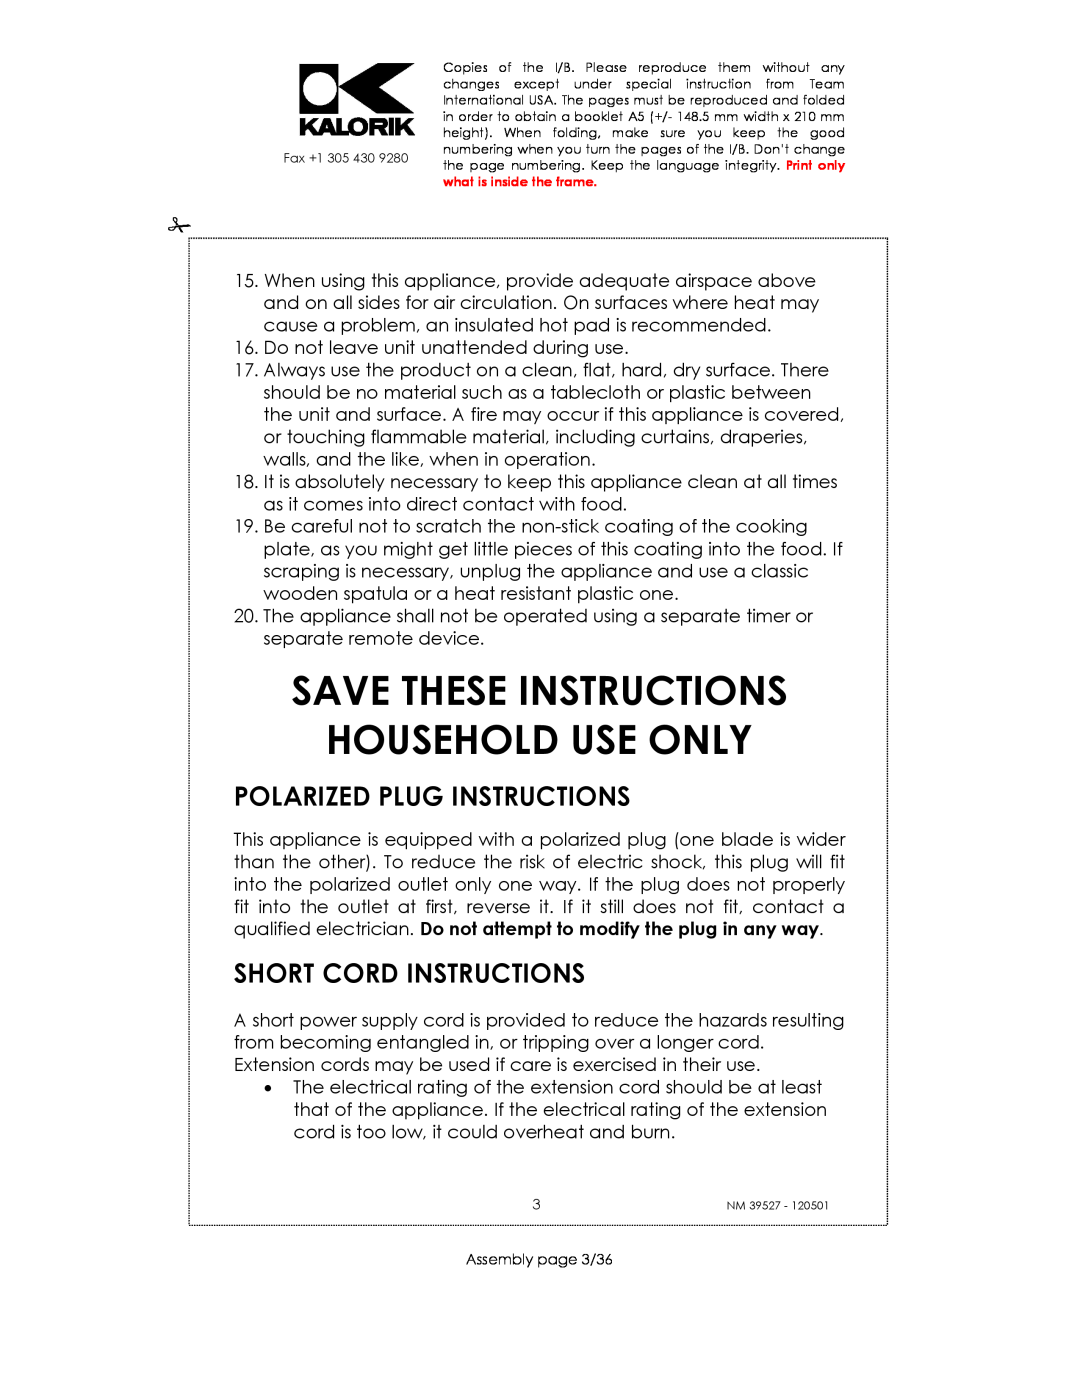 Kalorik NM 39527 manual Save These Instructions Household Use Only, Polarized Plug Instructions, Short Cord Instructions 